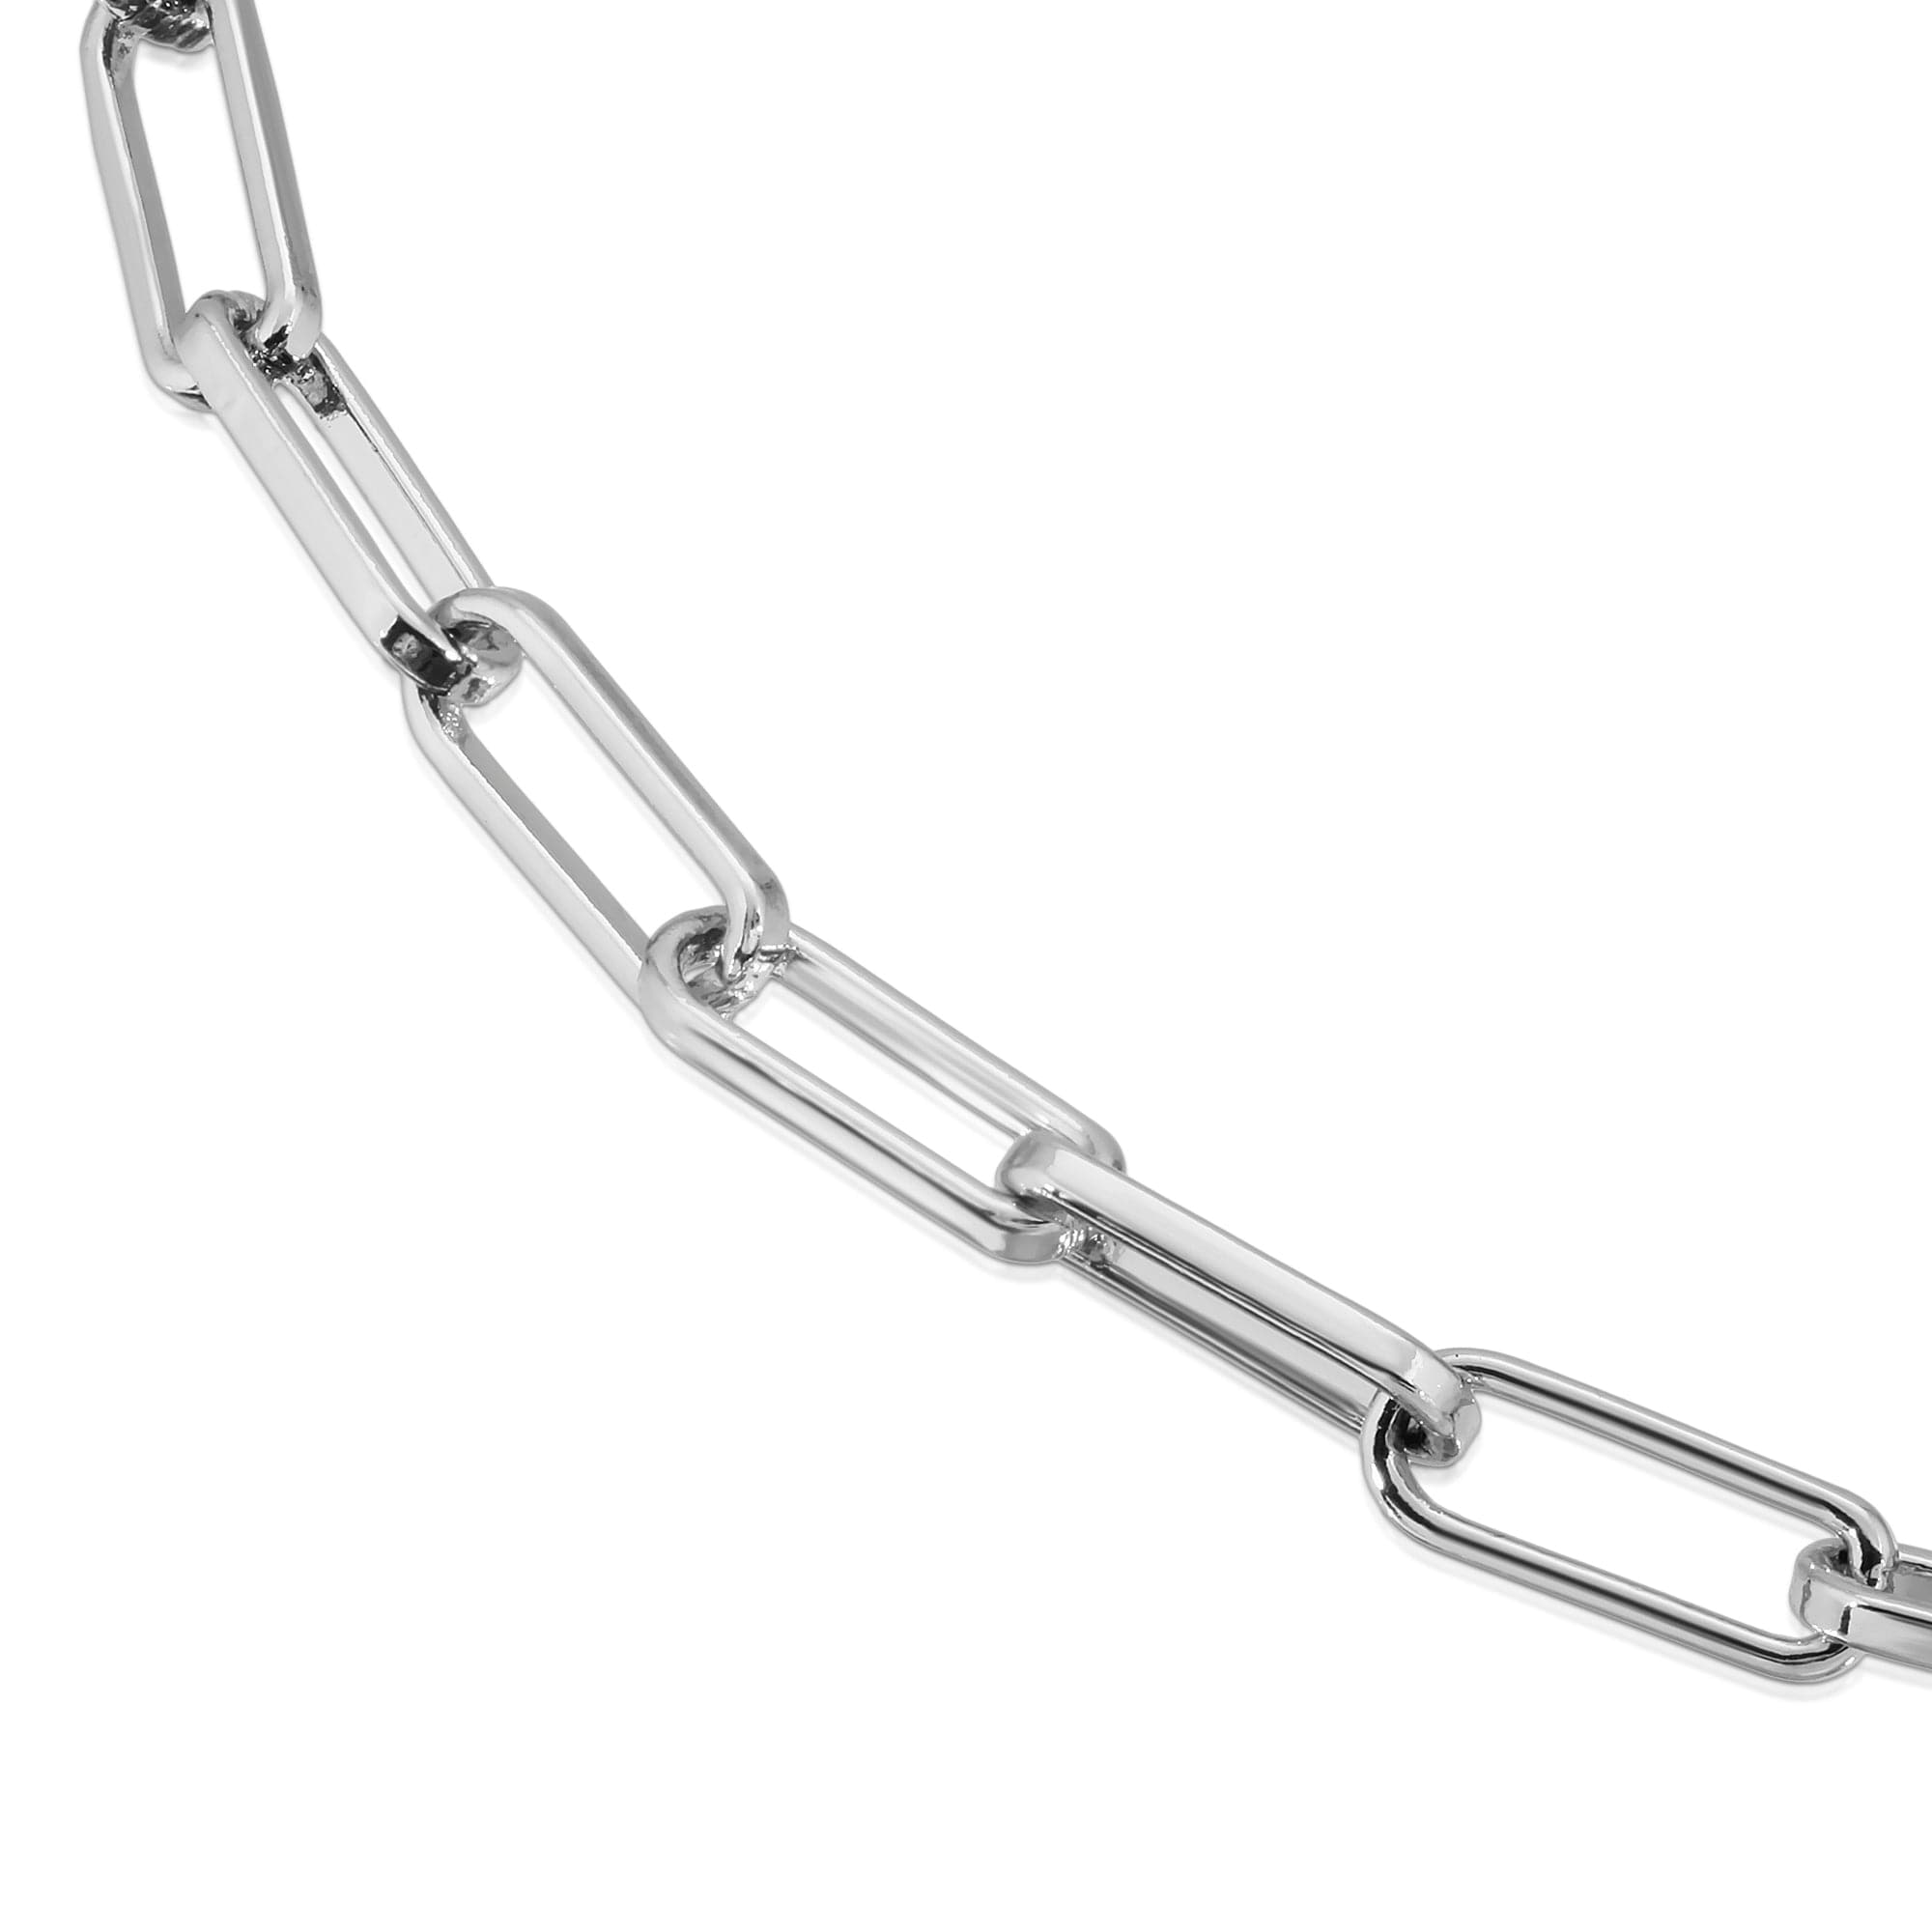 Silver Elongated Link Chain Bracelet